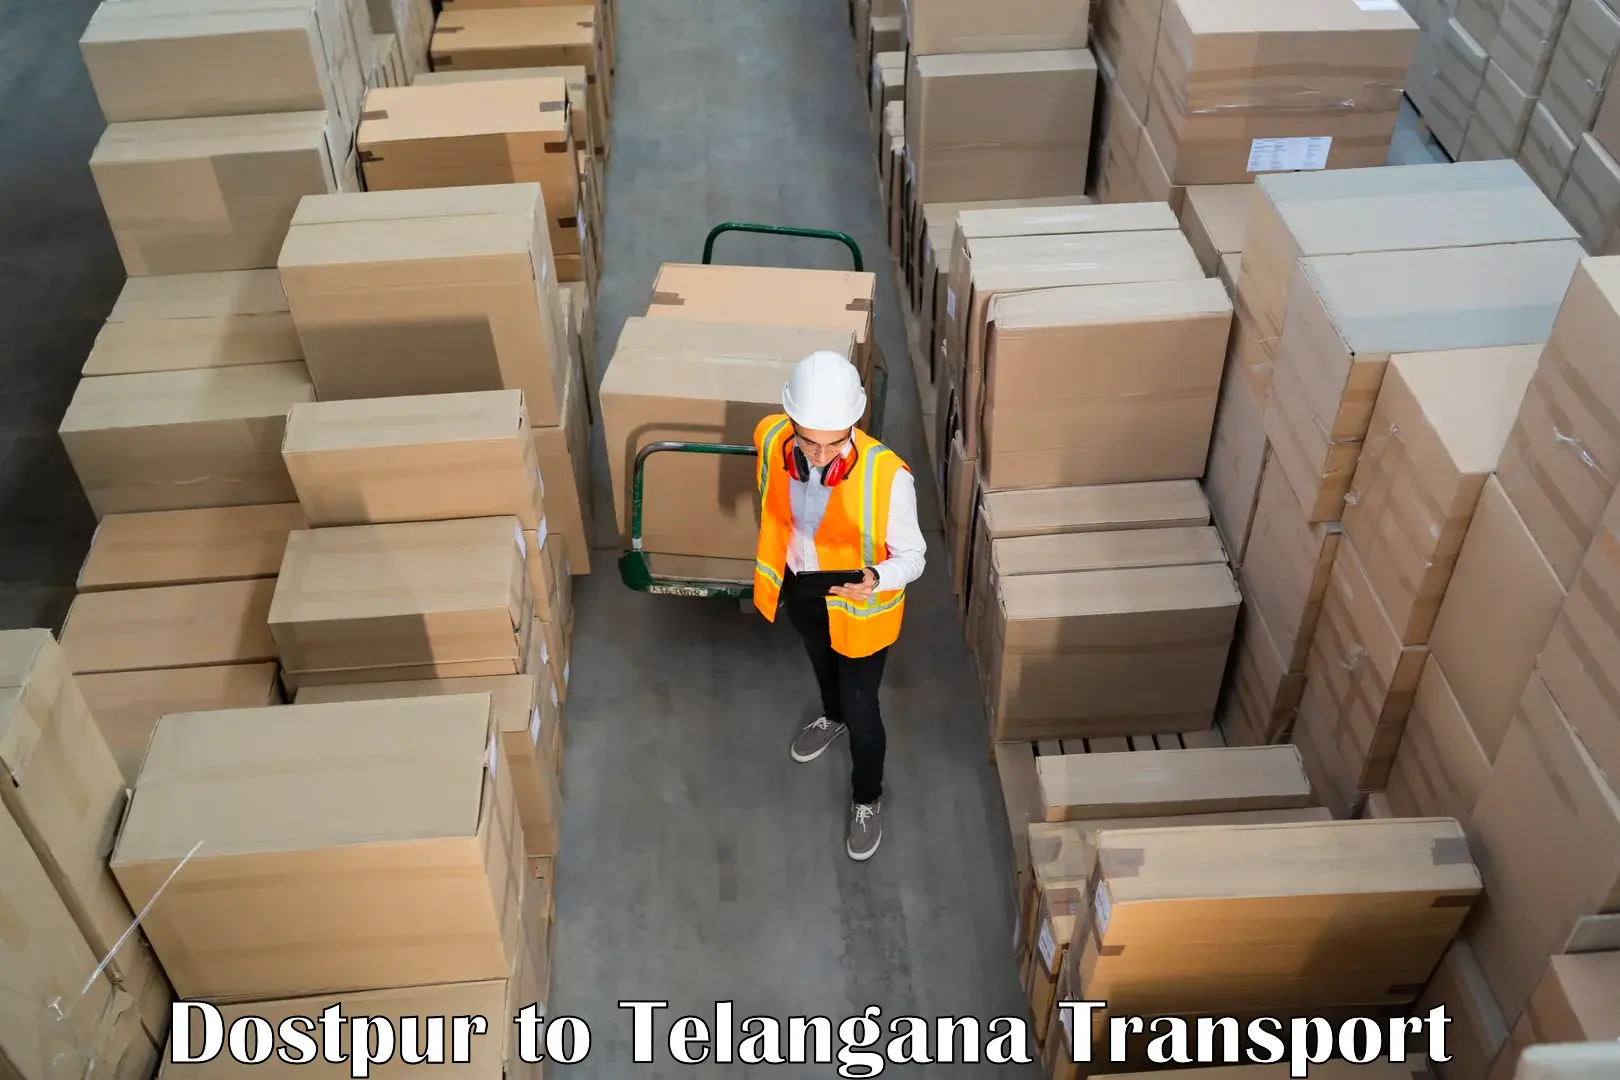 Road transport online services Dostpur to Professor Jayashankar Telangana State Agricultural University Hyderabad